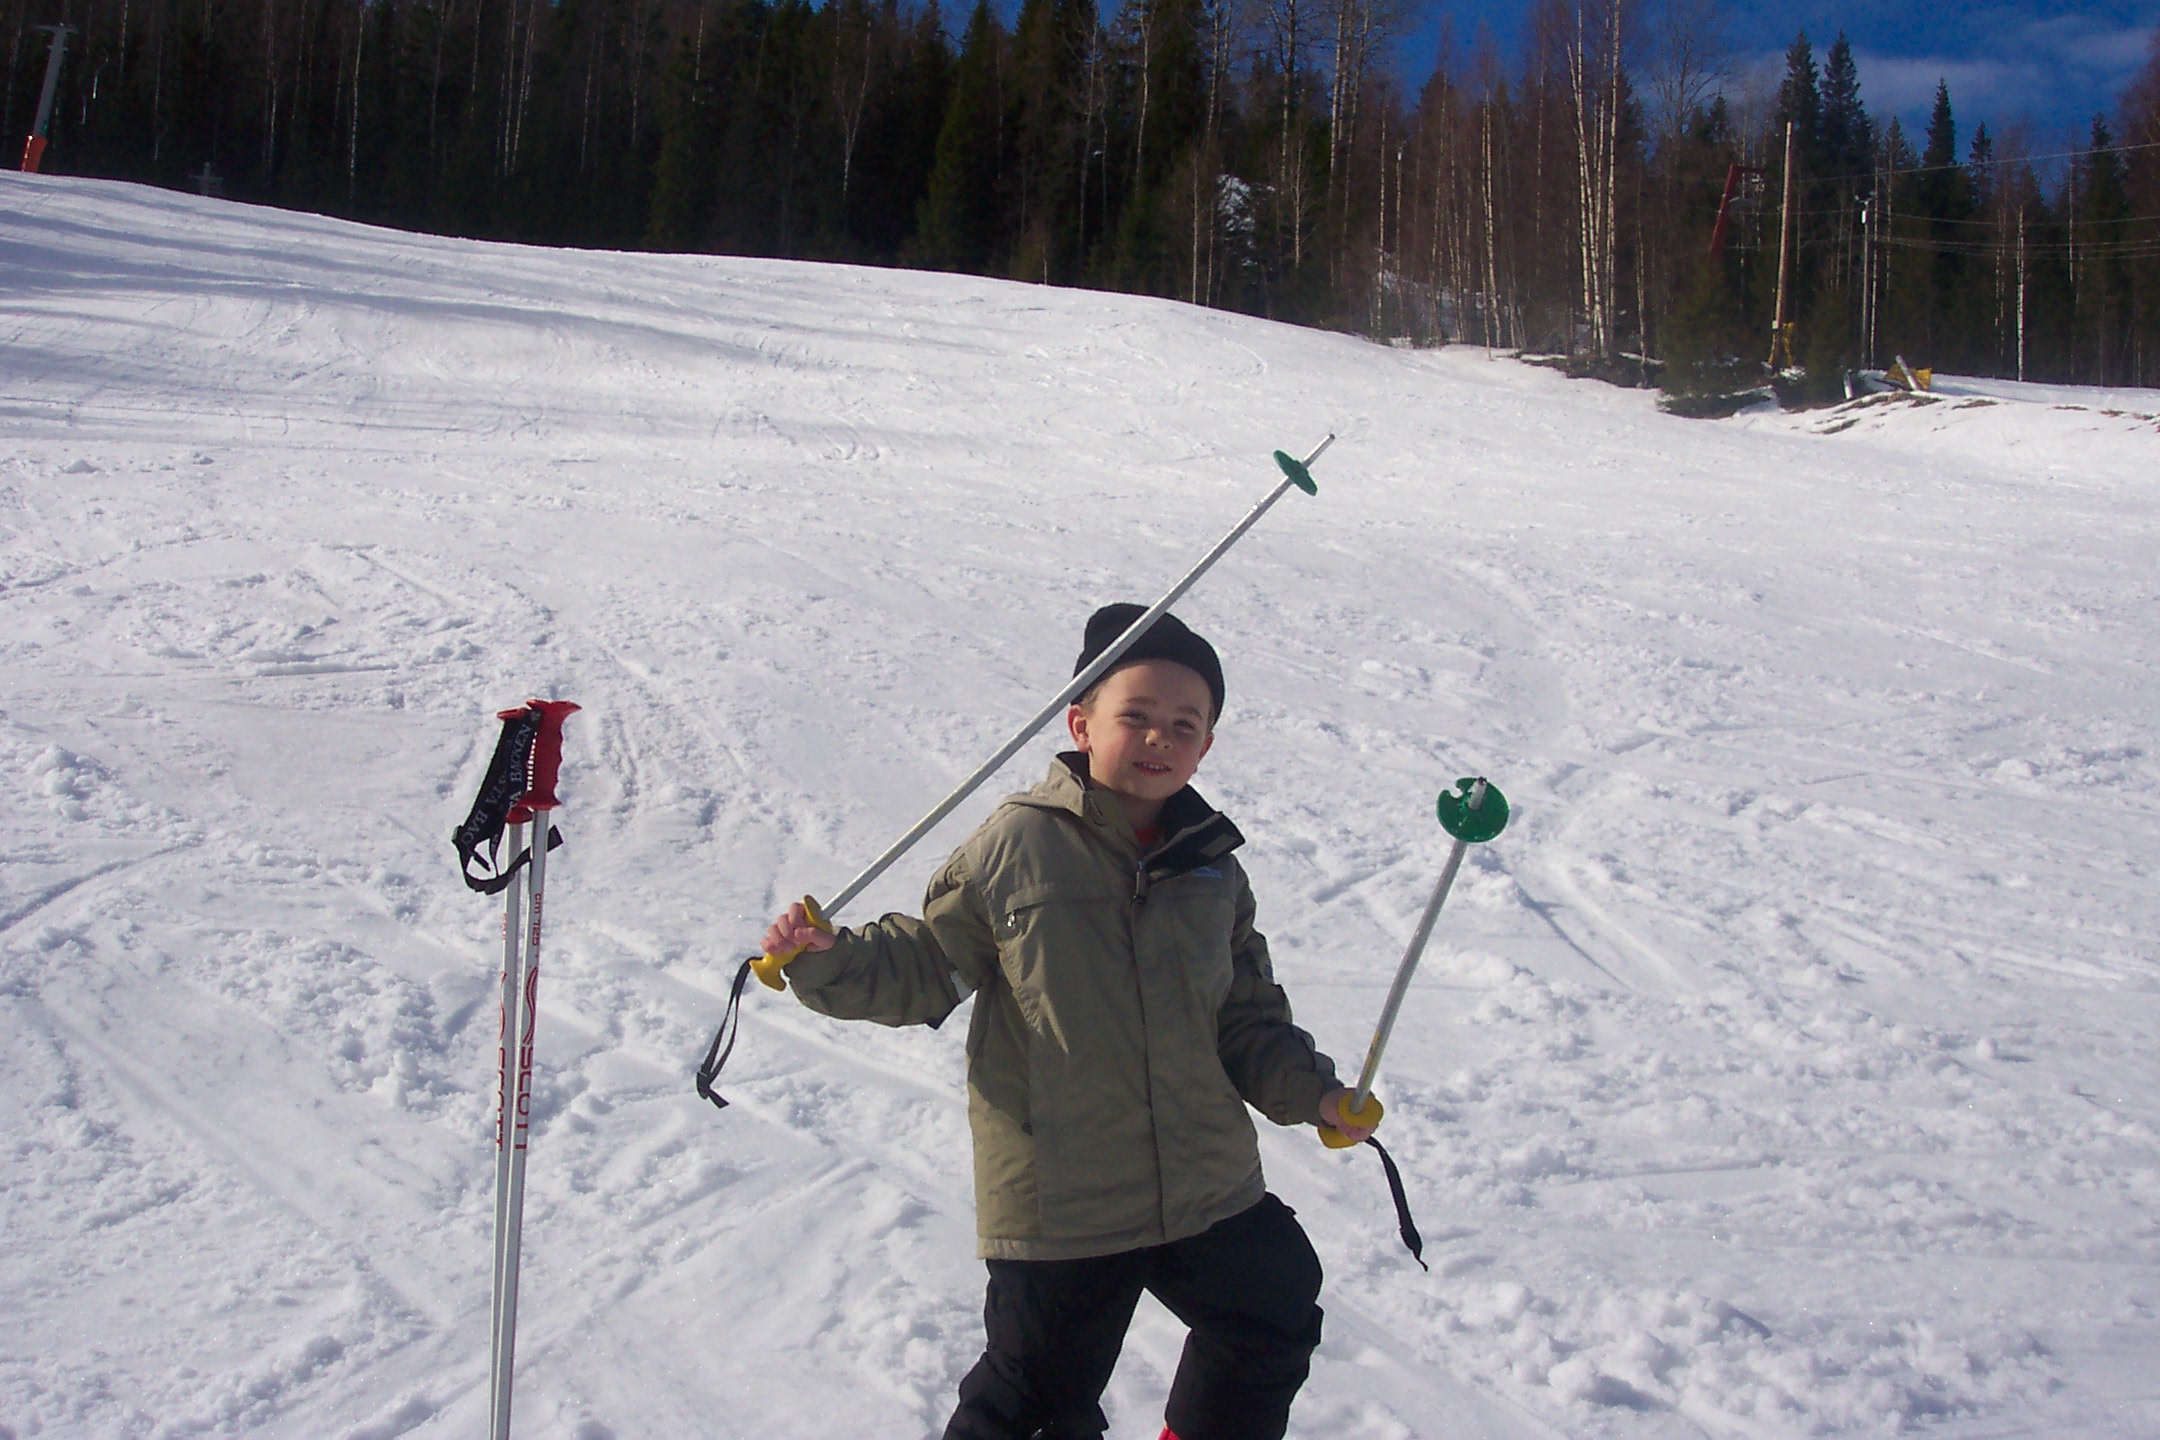 David is skiing in Bjsta backen